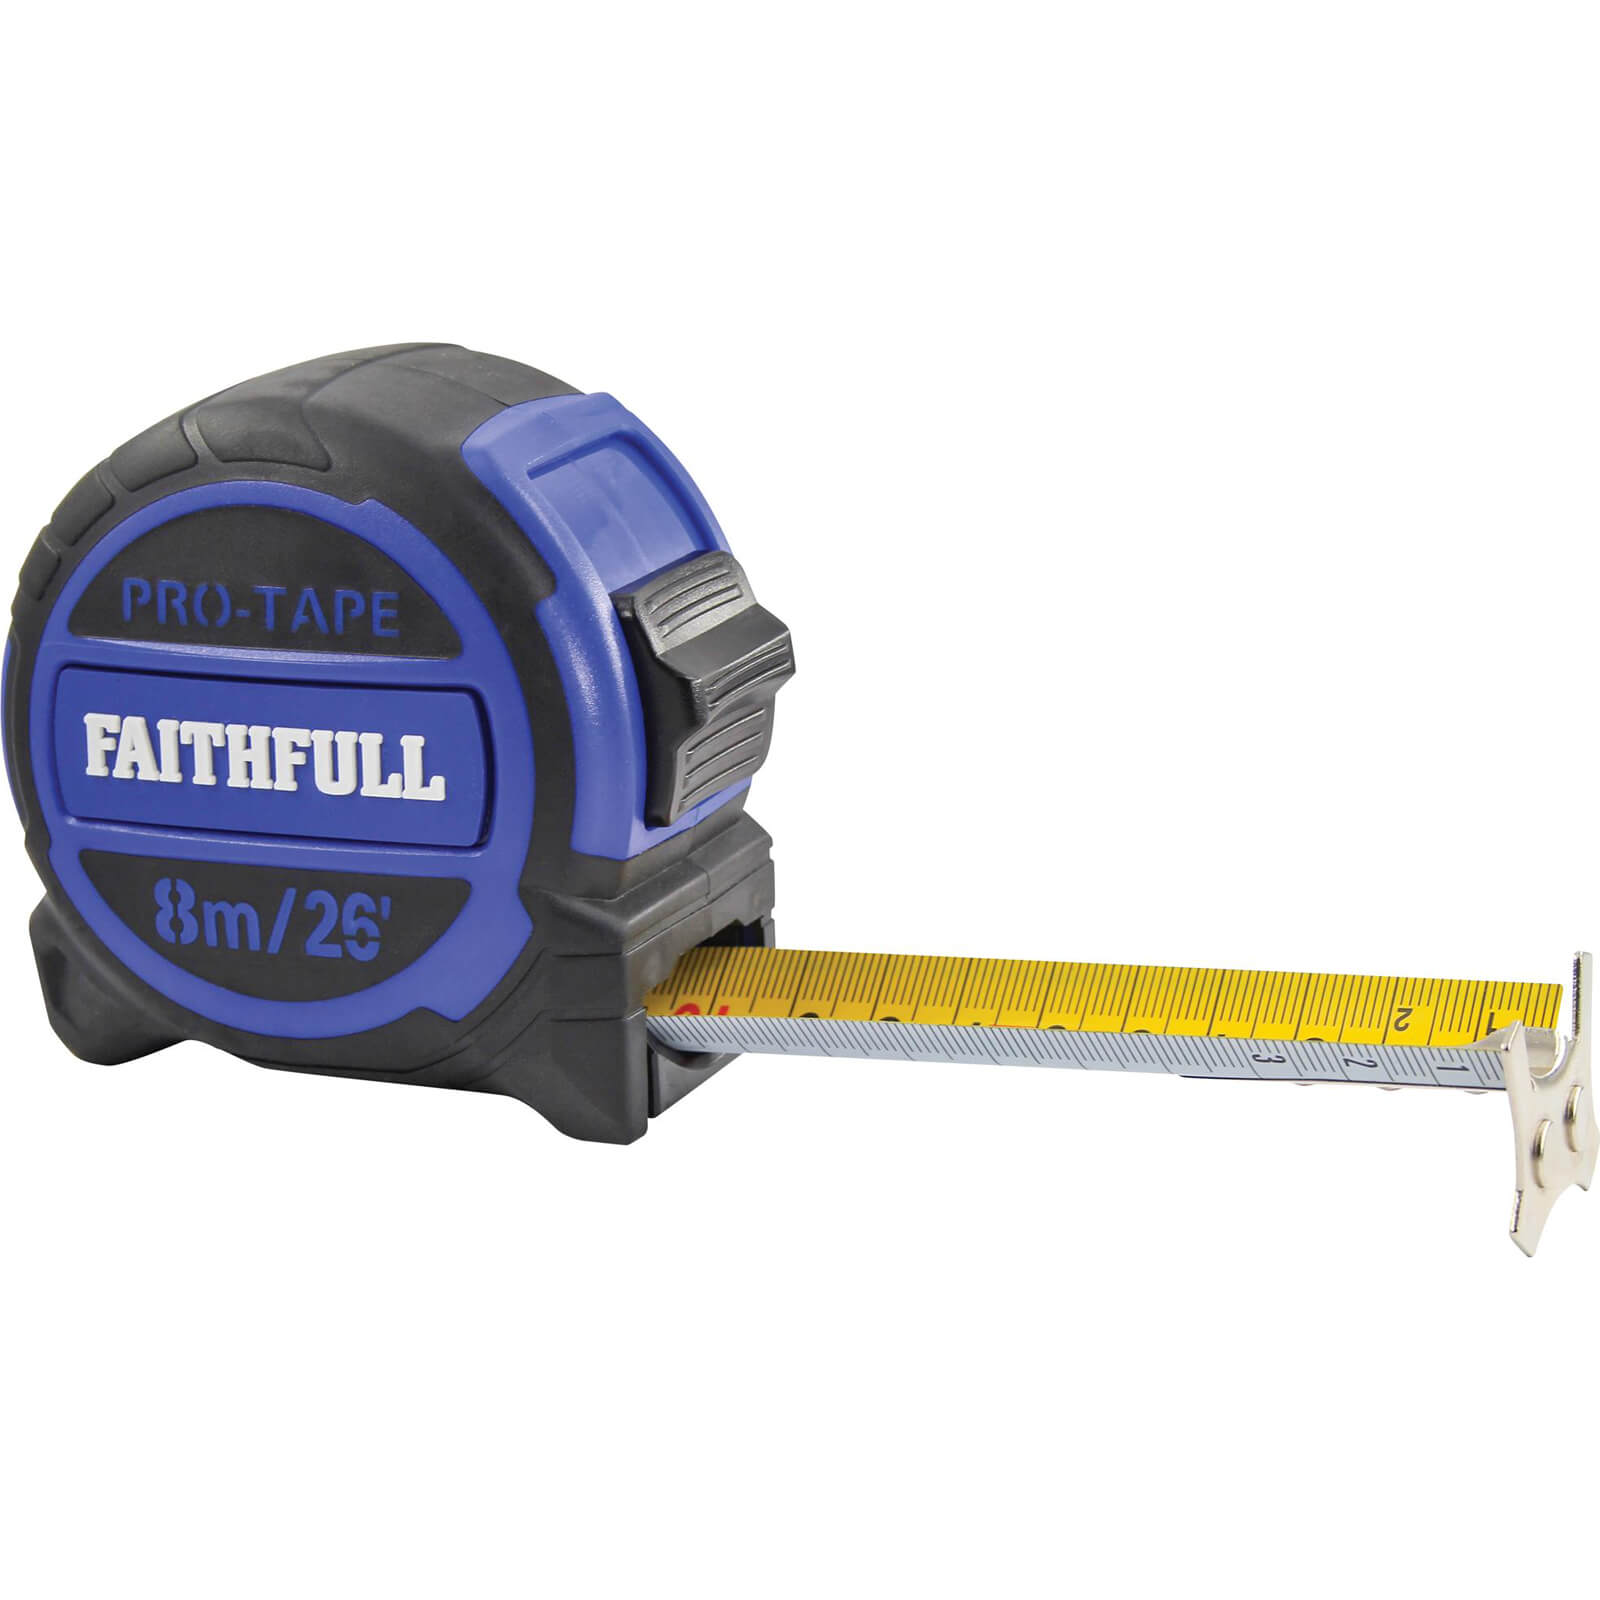 Photos - Tape Measure and Surveyor Tape Faithfull Pro Tape Measure Imperial & Metric 26ft / 8m 32mm TM832MI 